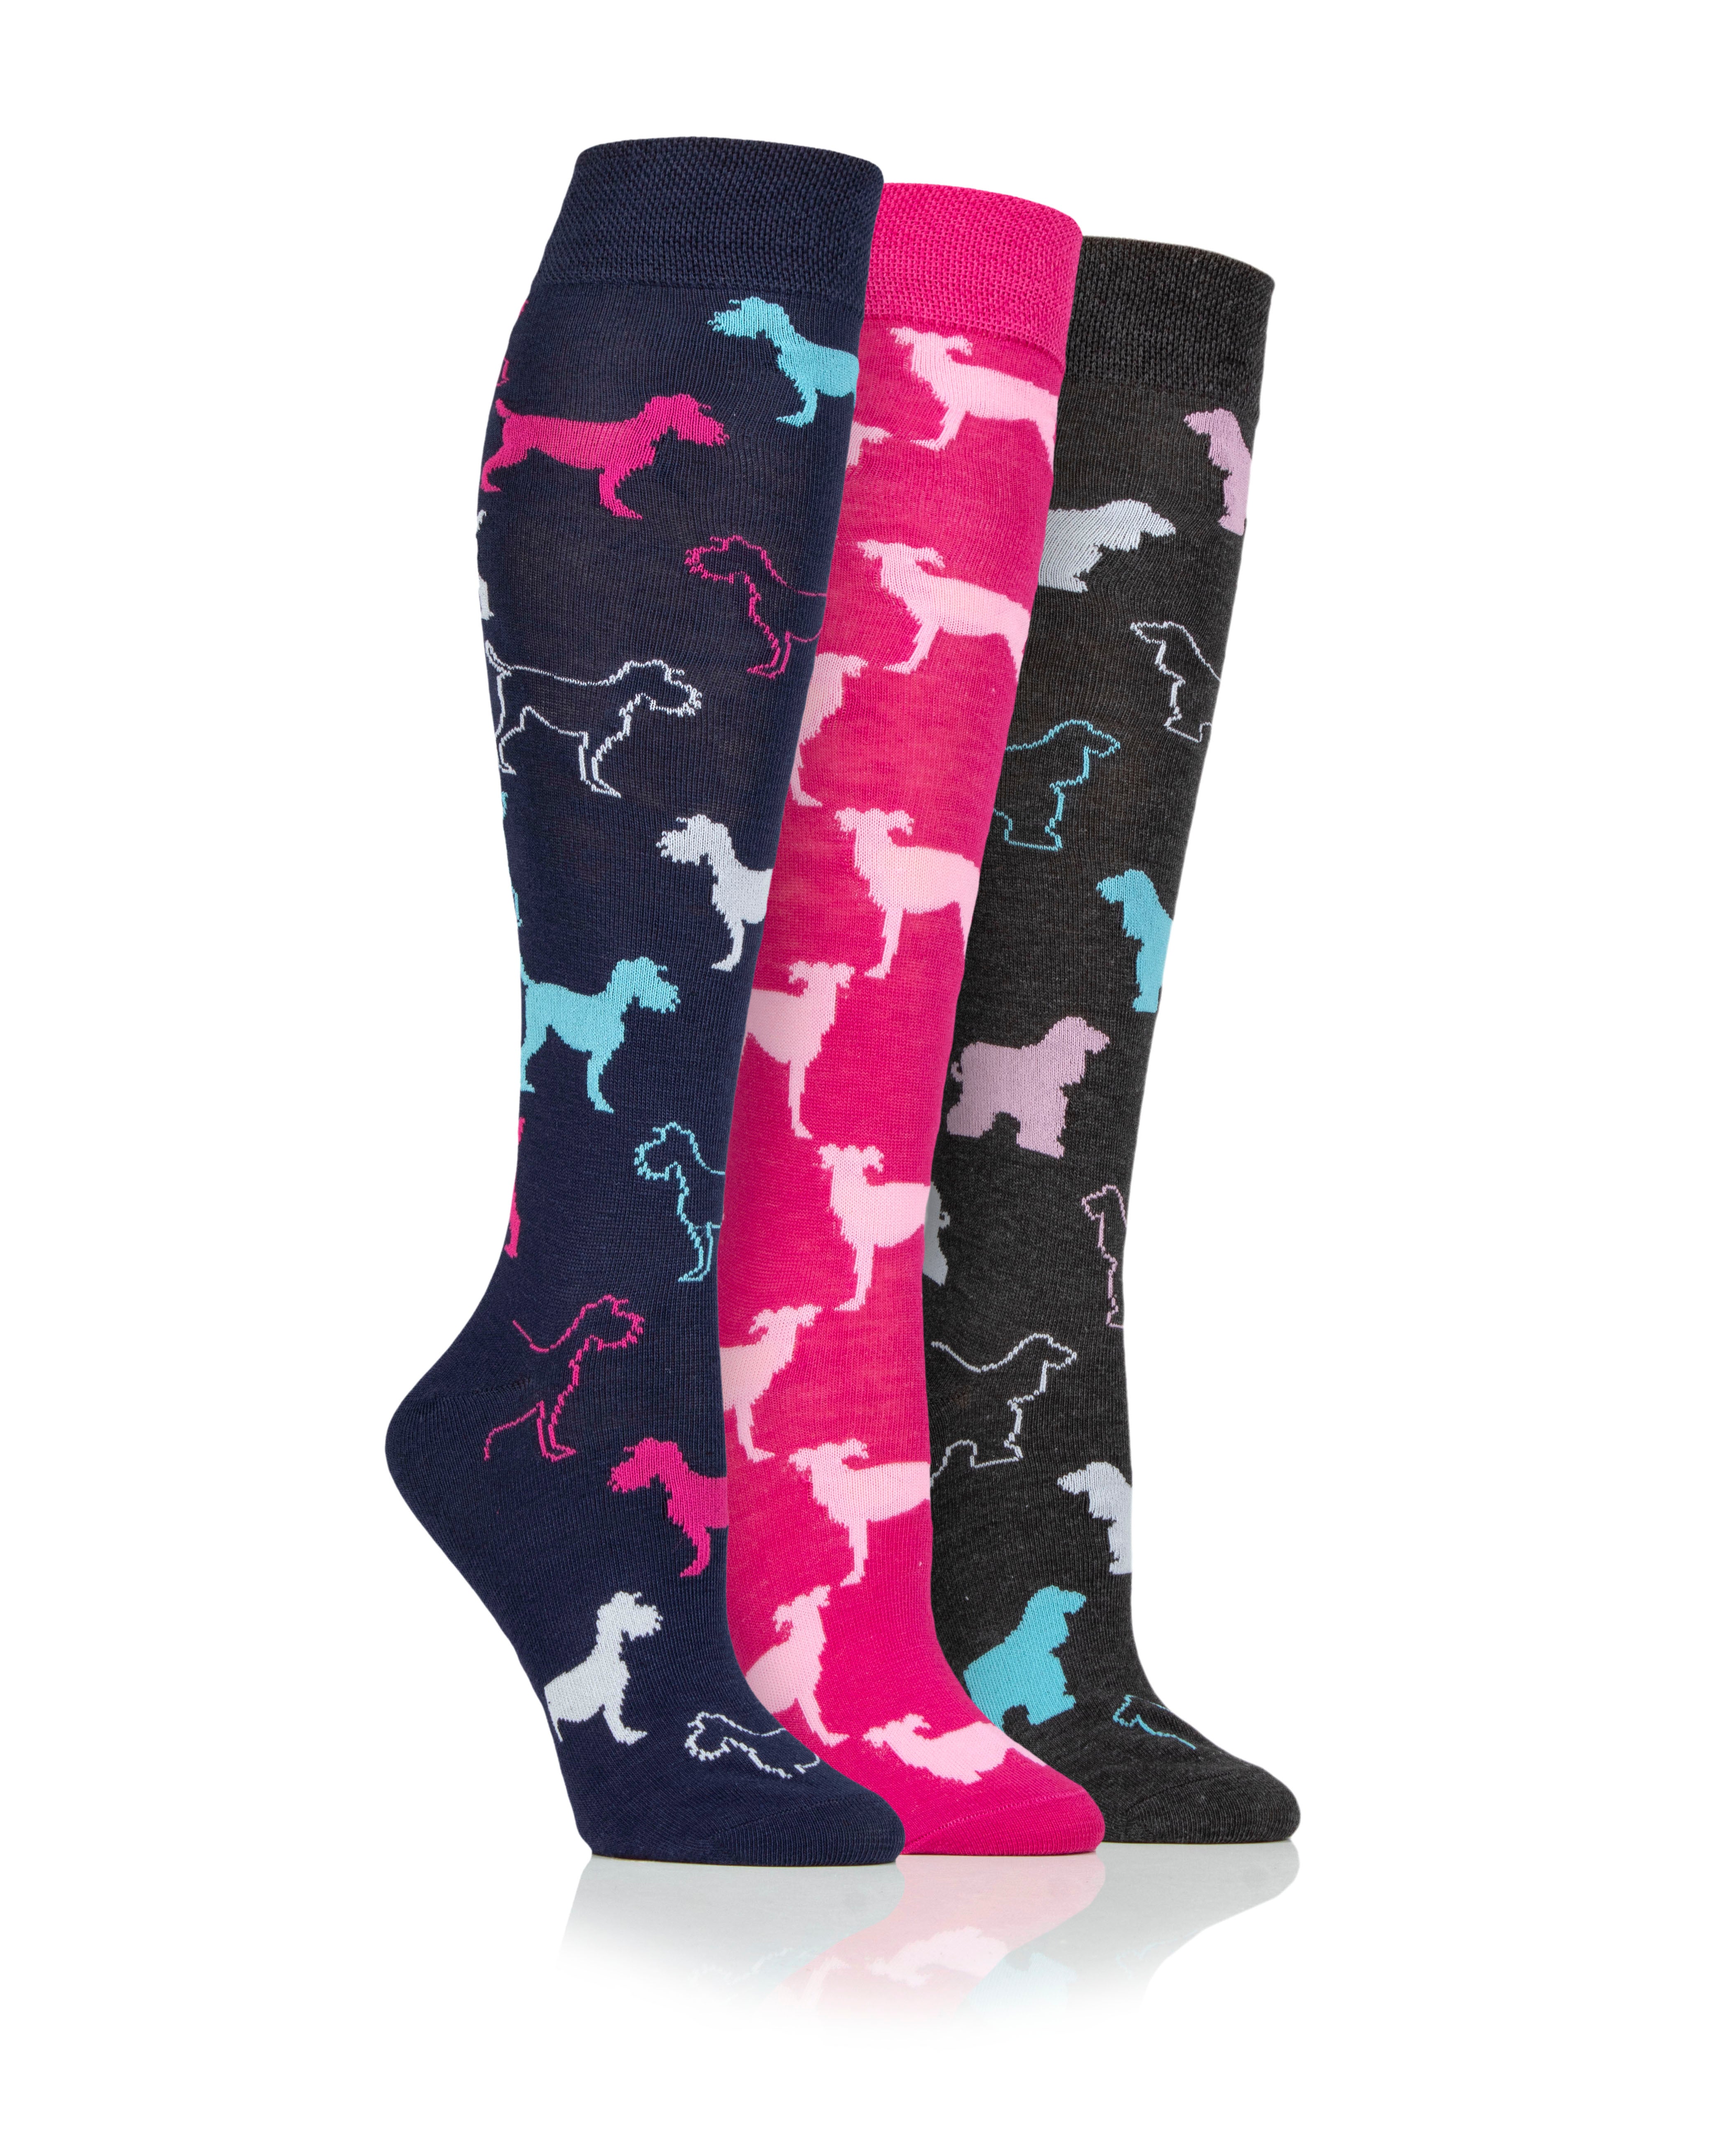 Dare To Wear Ladies Long Socks 3 Pack  - Dogs